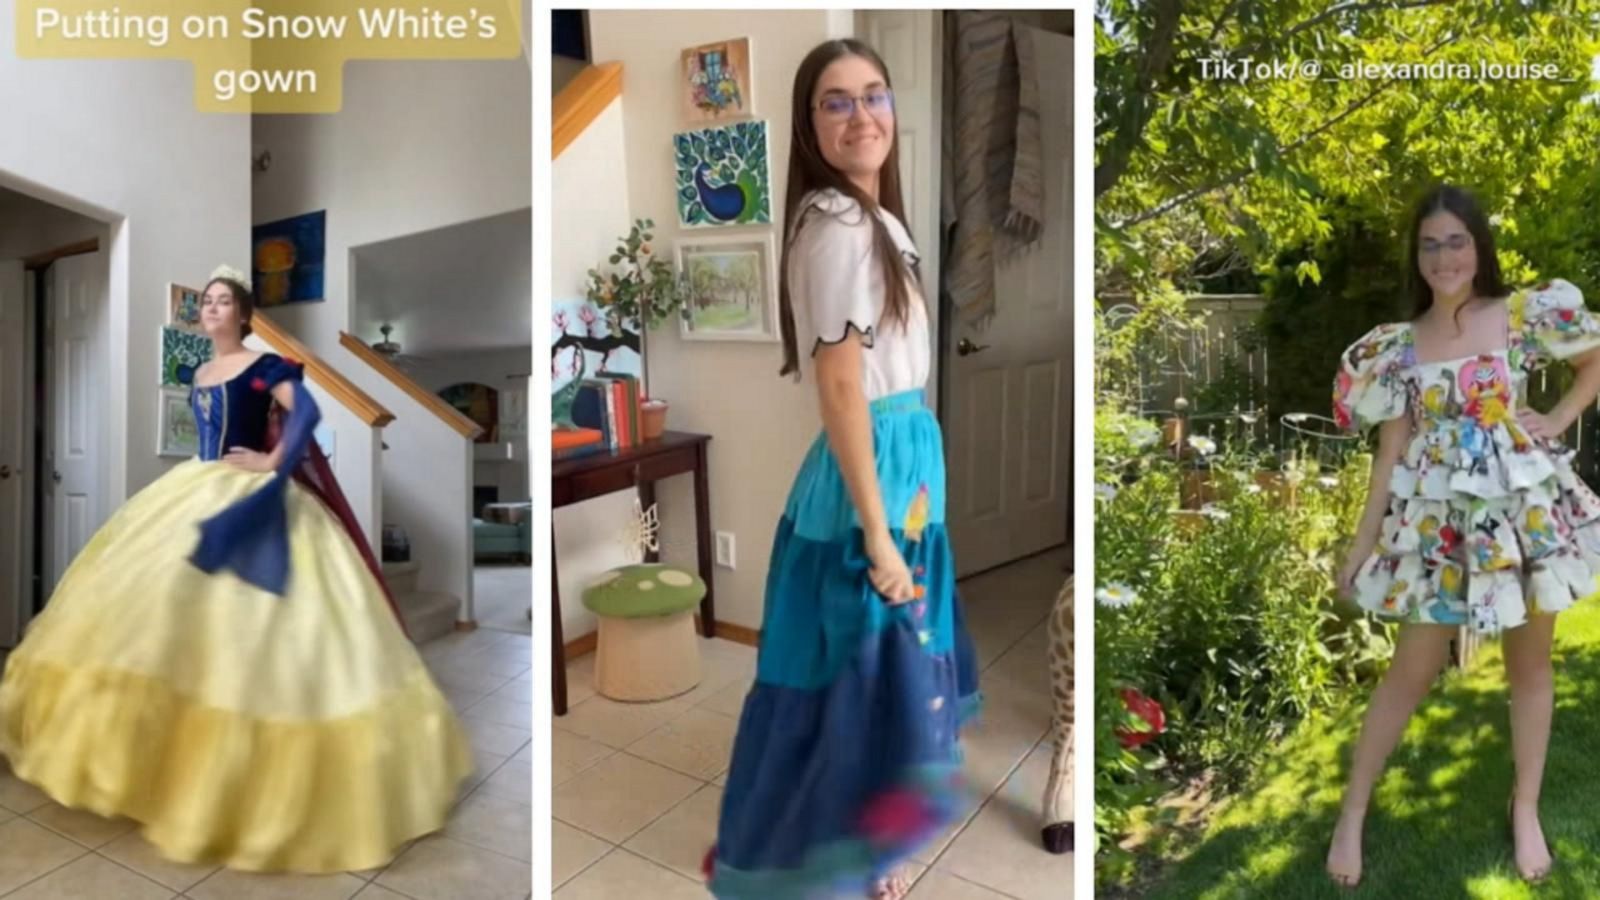 disney princess dresses for teenagers